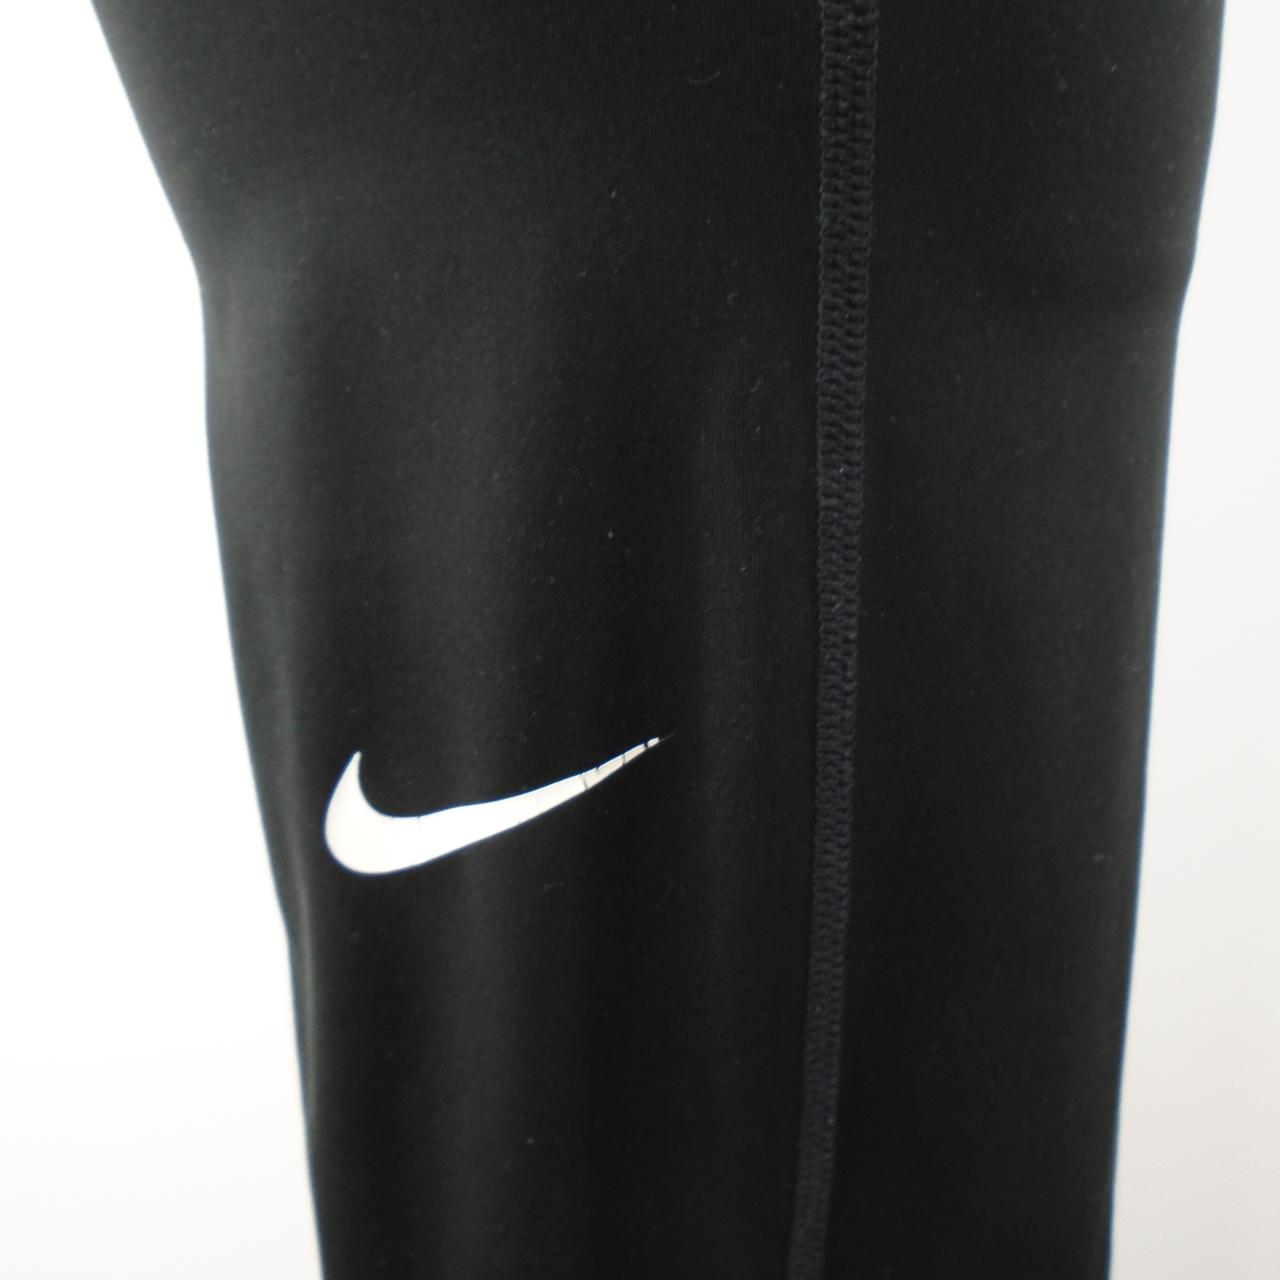 Women's Pants Nike. Black. S. Used. Good